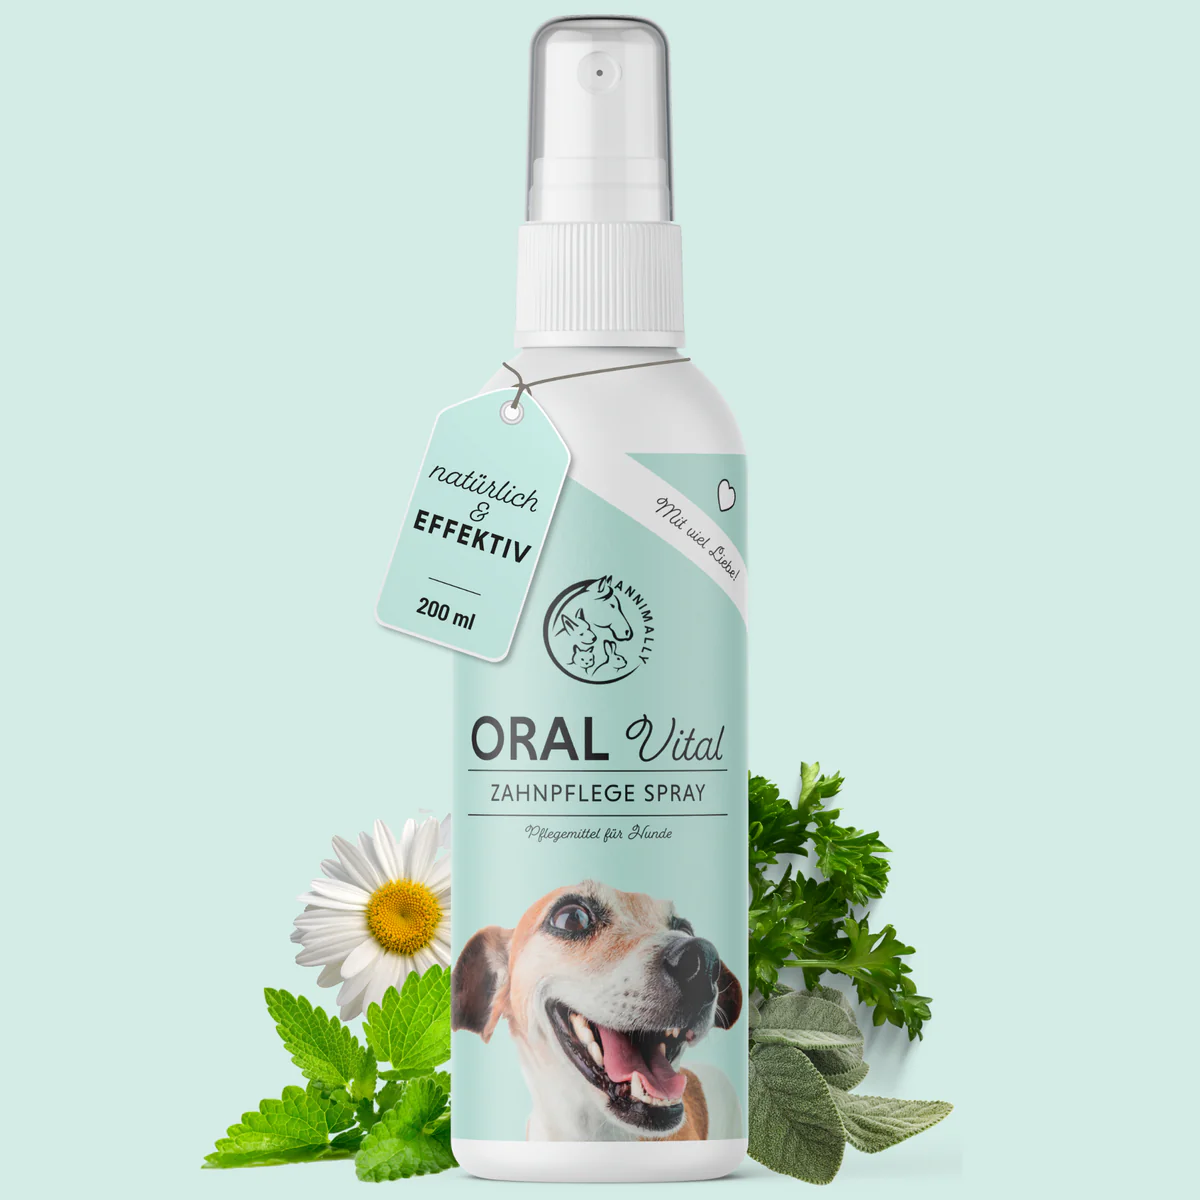 Oral Vital tandspray voor honden van Annimally